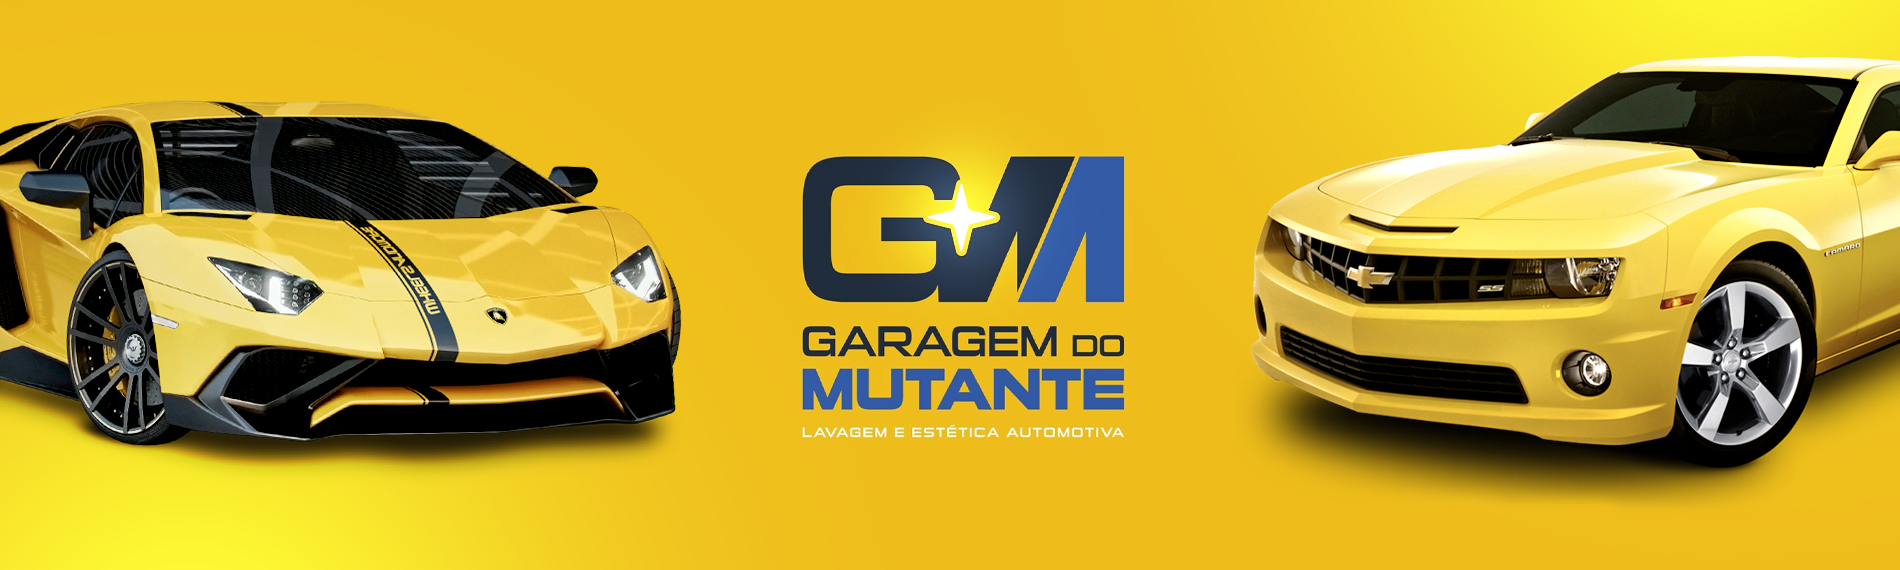 banner da empresa Garagem do Mutante Estética Automotiva